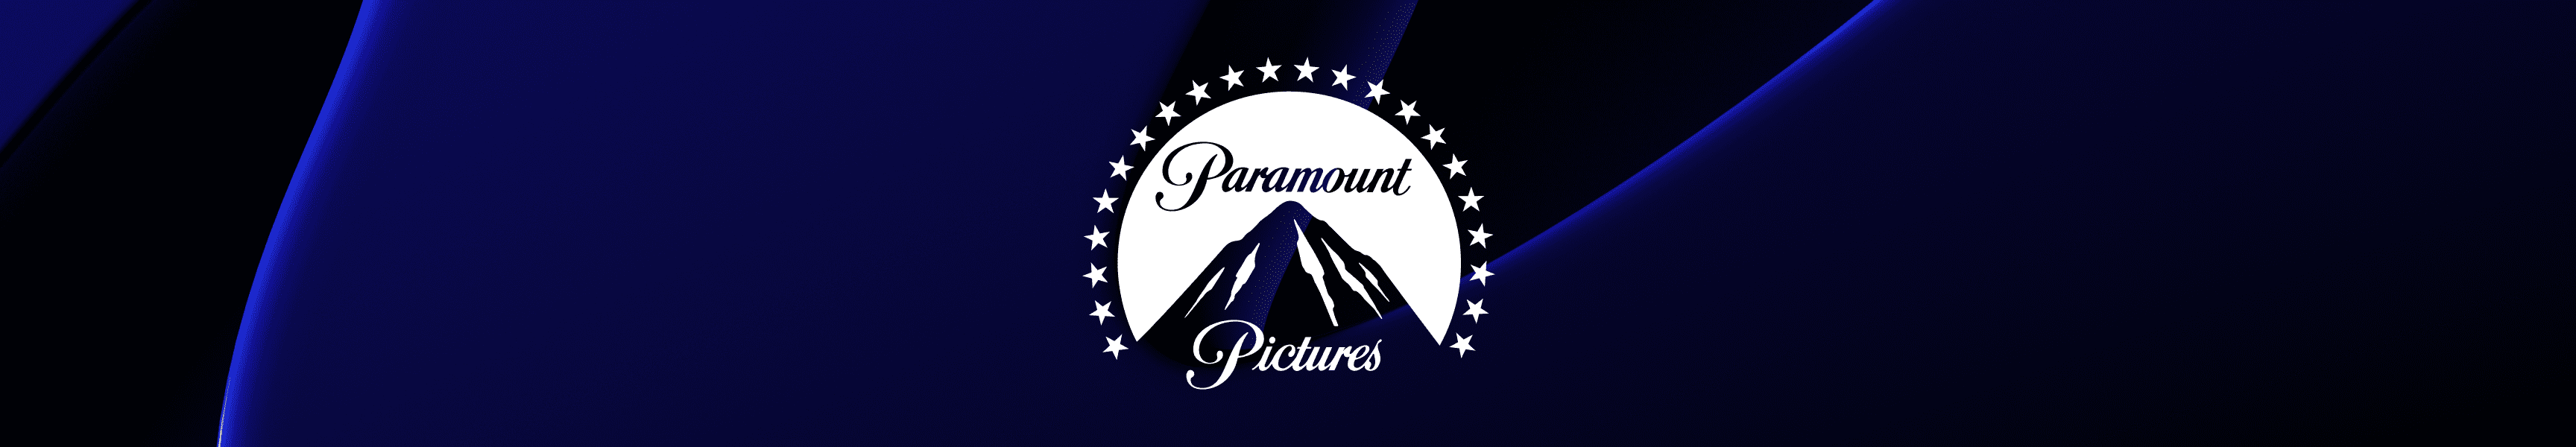 Paramount Pictures Tumblers